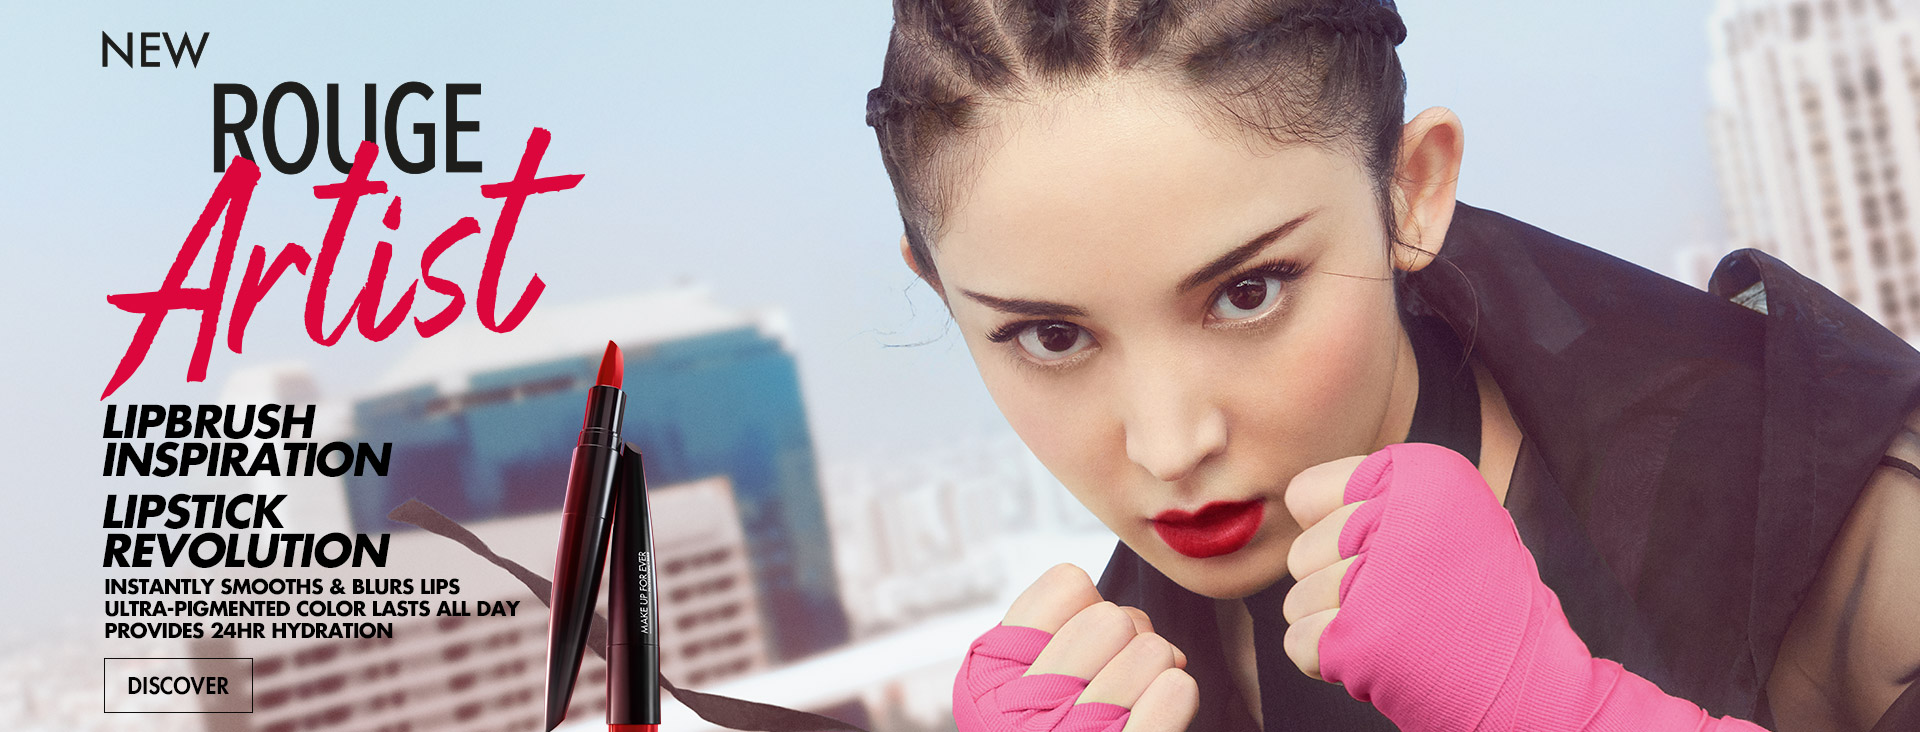 New Rouge Artist Lipstick